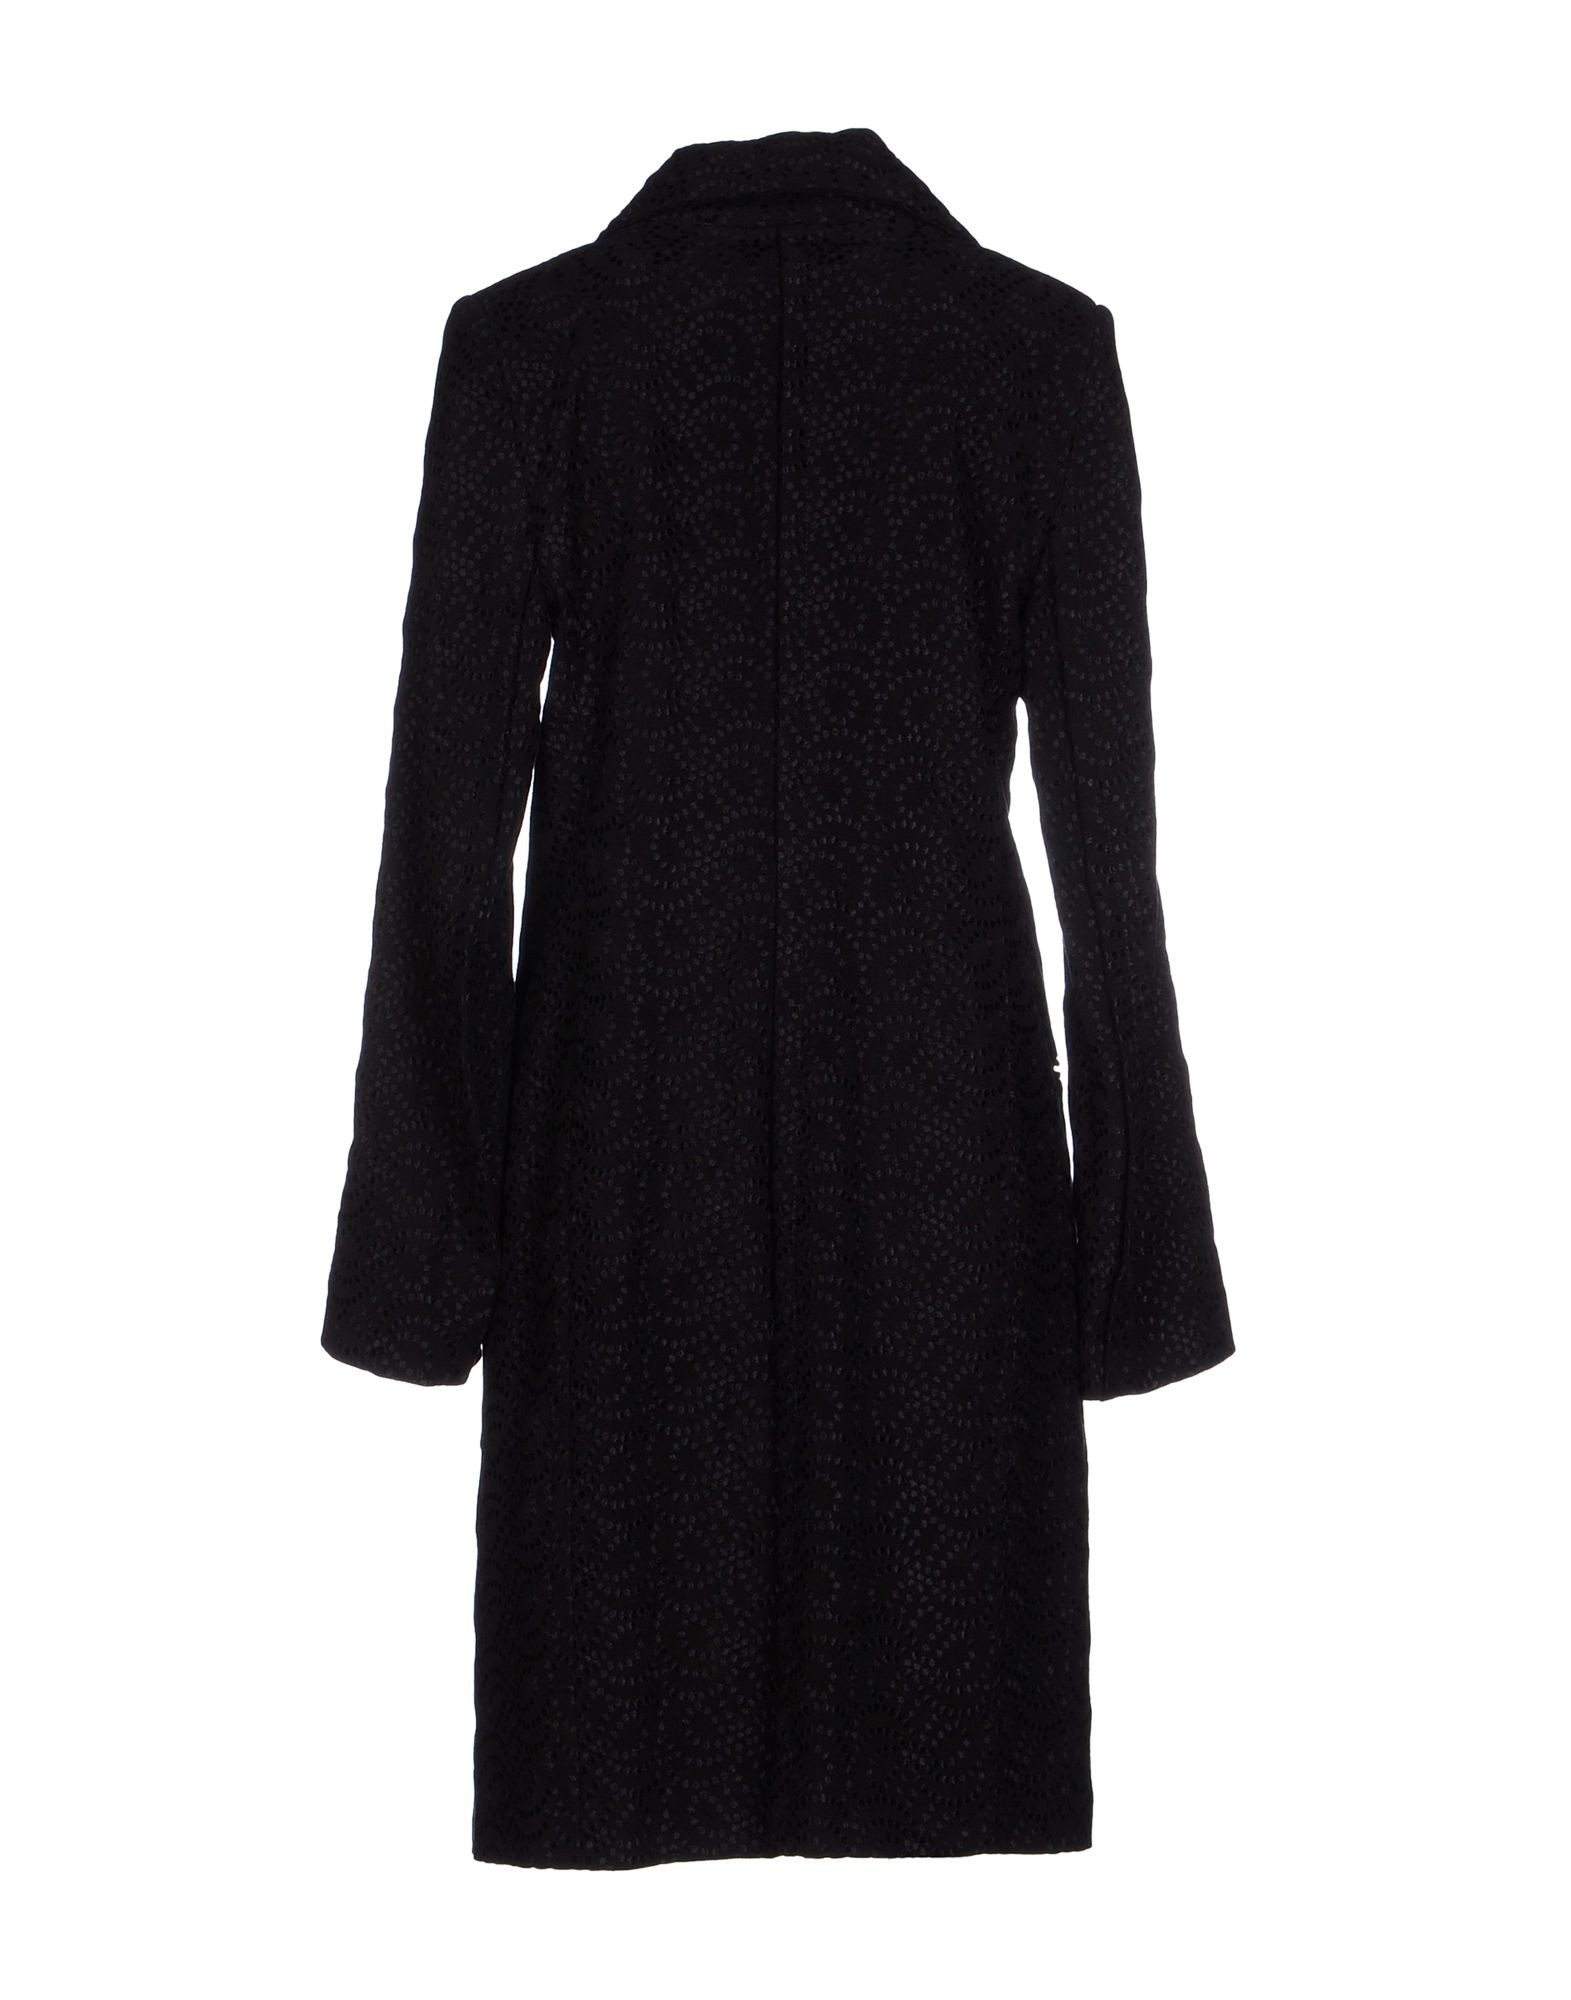 Lyst - Ann Demeulemeester Coat in Black